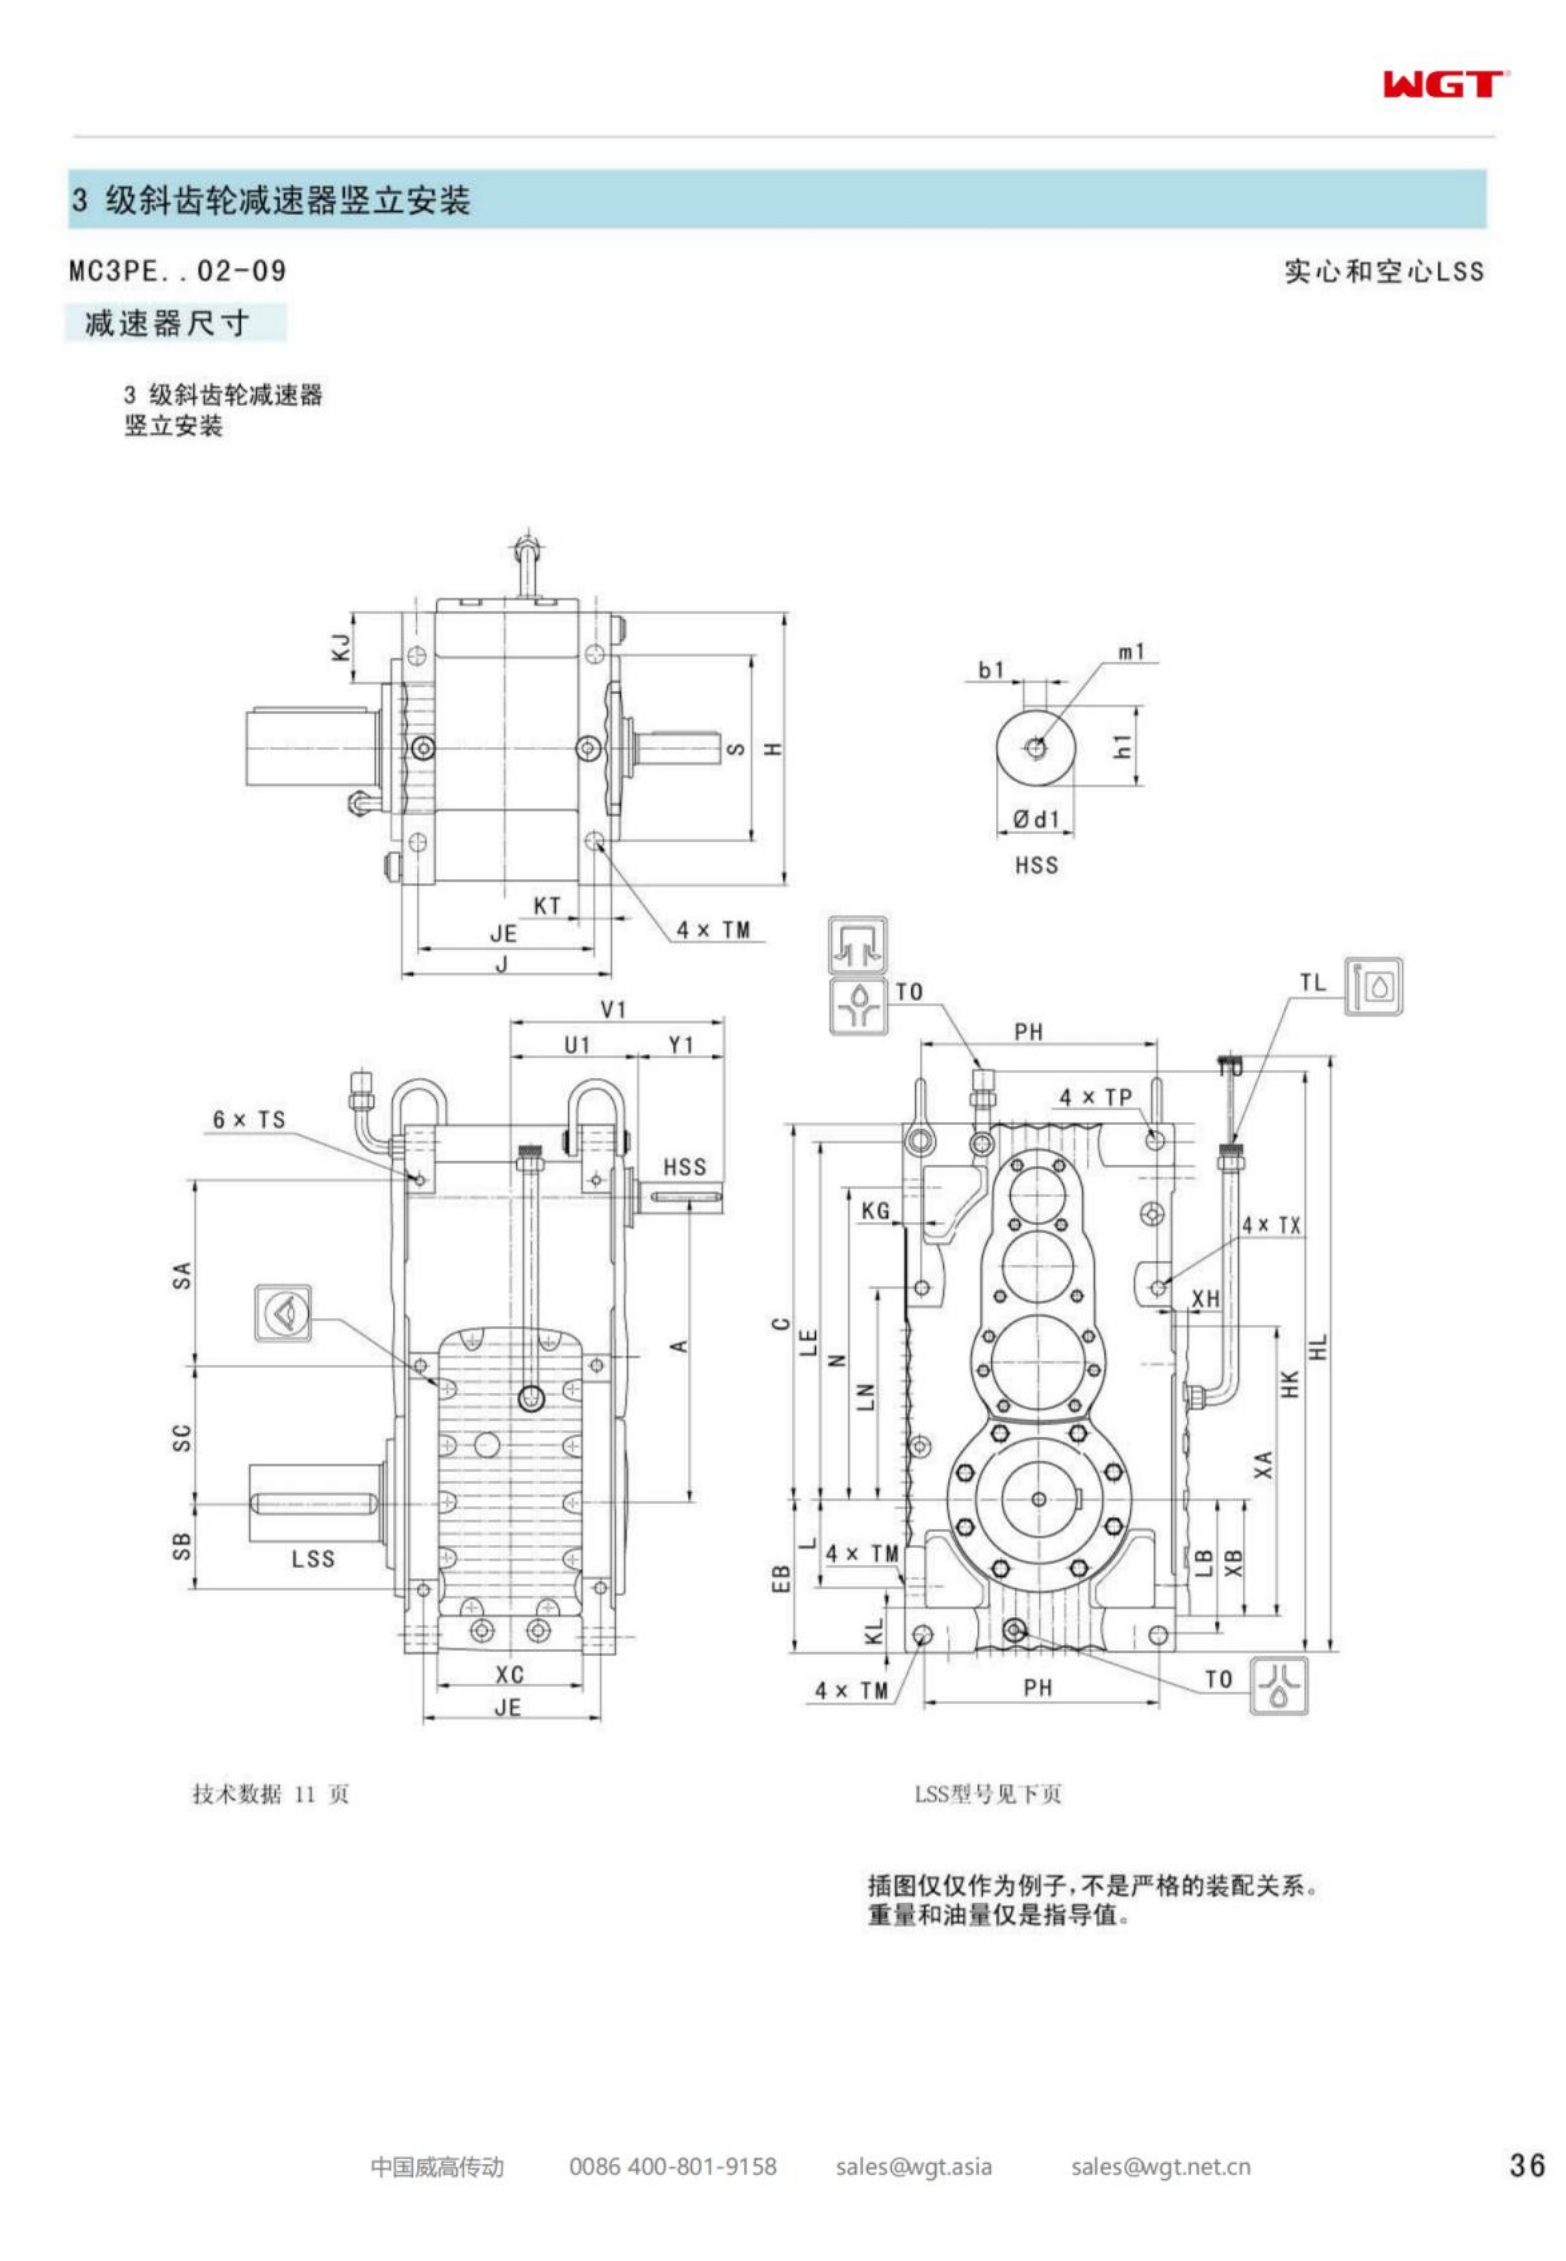 MC3PEHF07 replaces _SEW_MC_Series gearbox (patent)